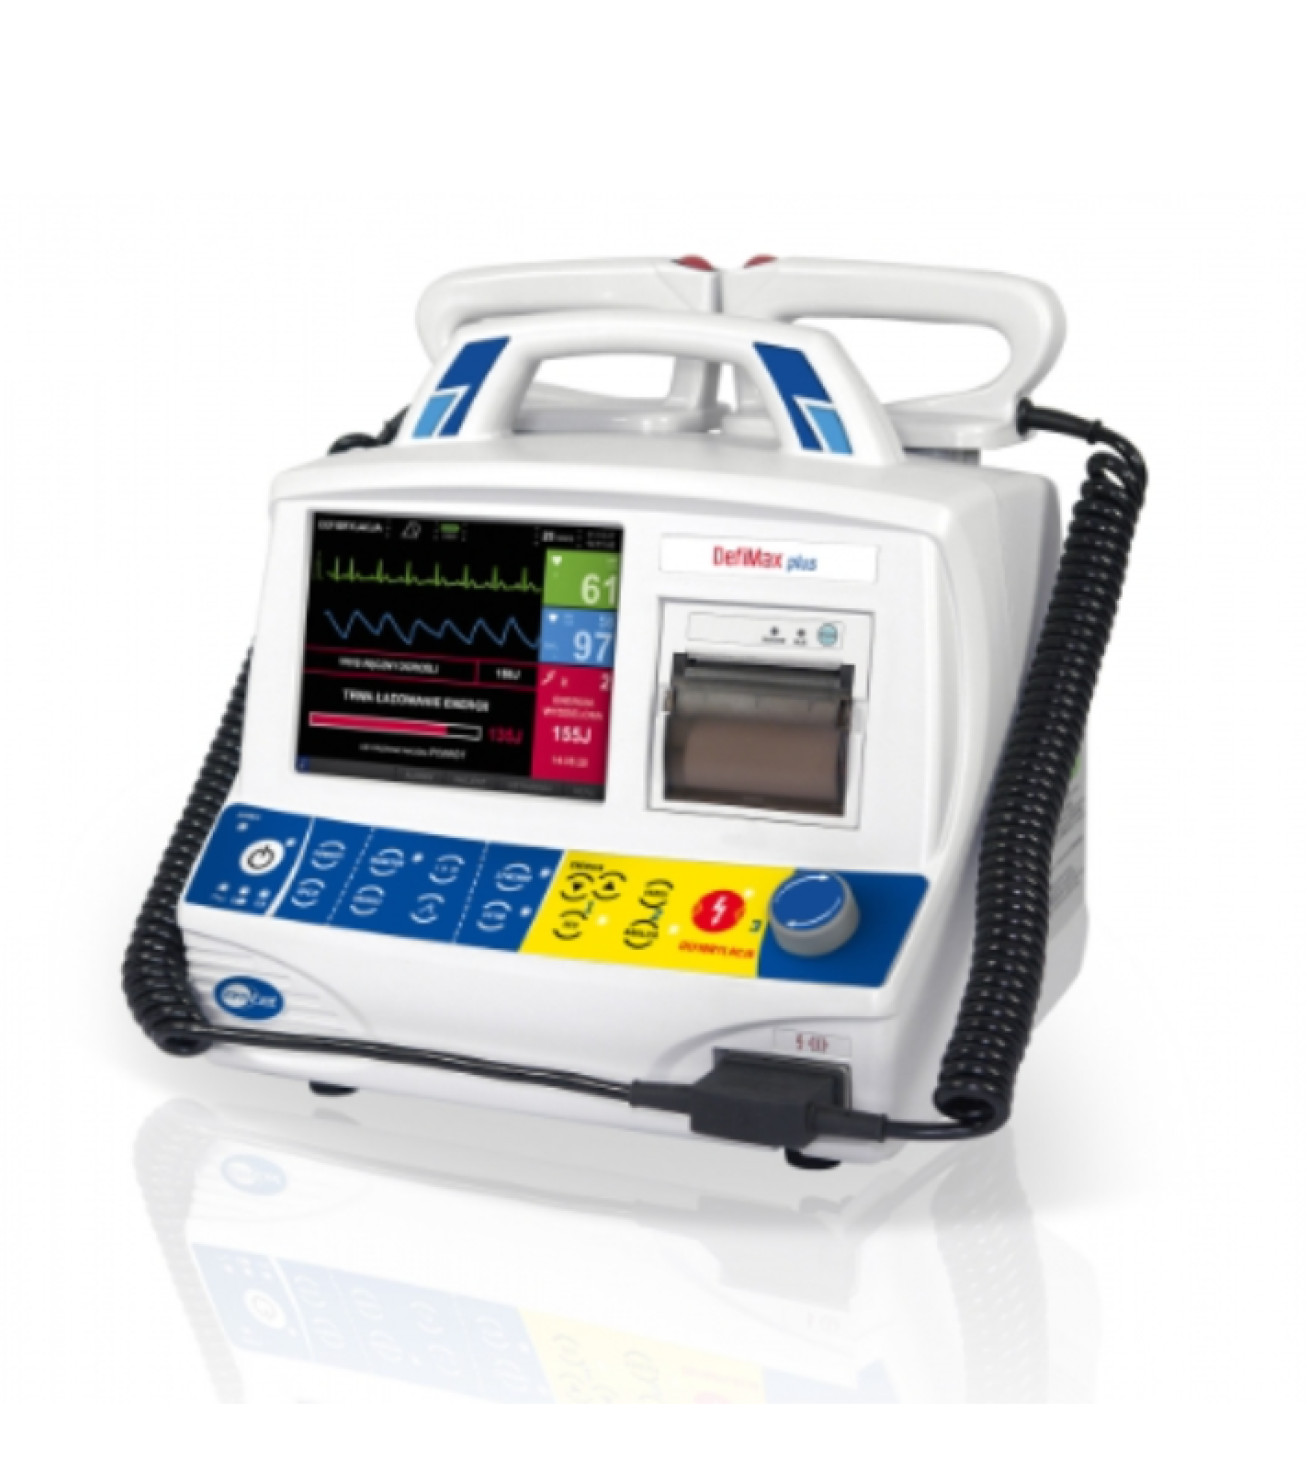 DefiMax Plus advanced clinical defibrillator